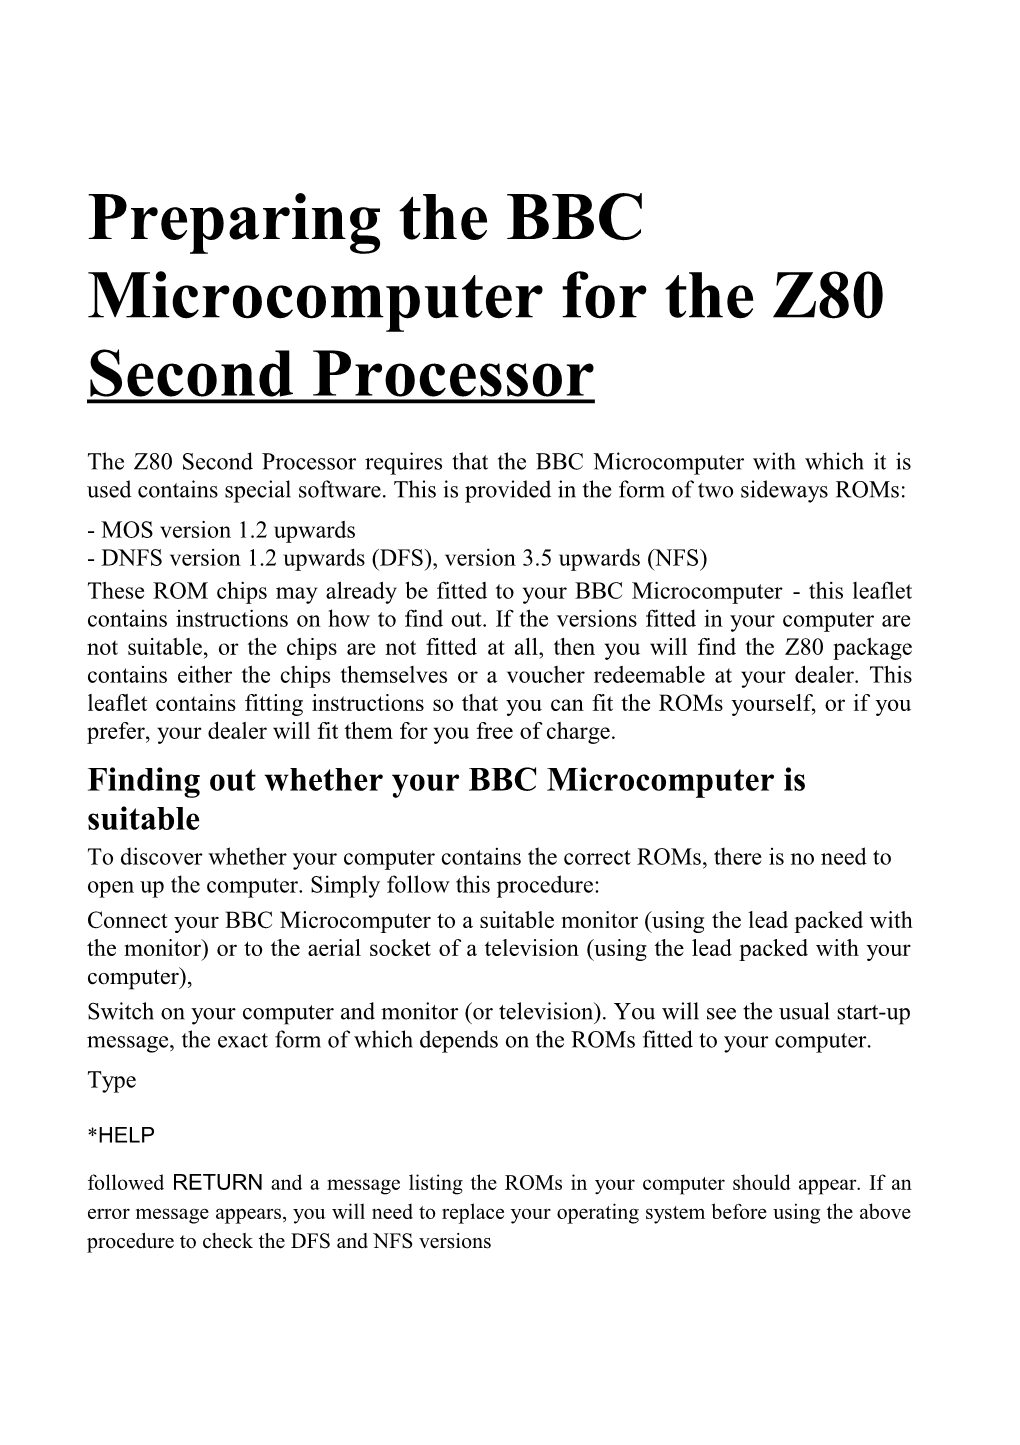 Preparing the BBC Microcomputer for the Z80 Second Processor